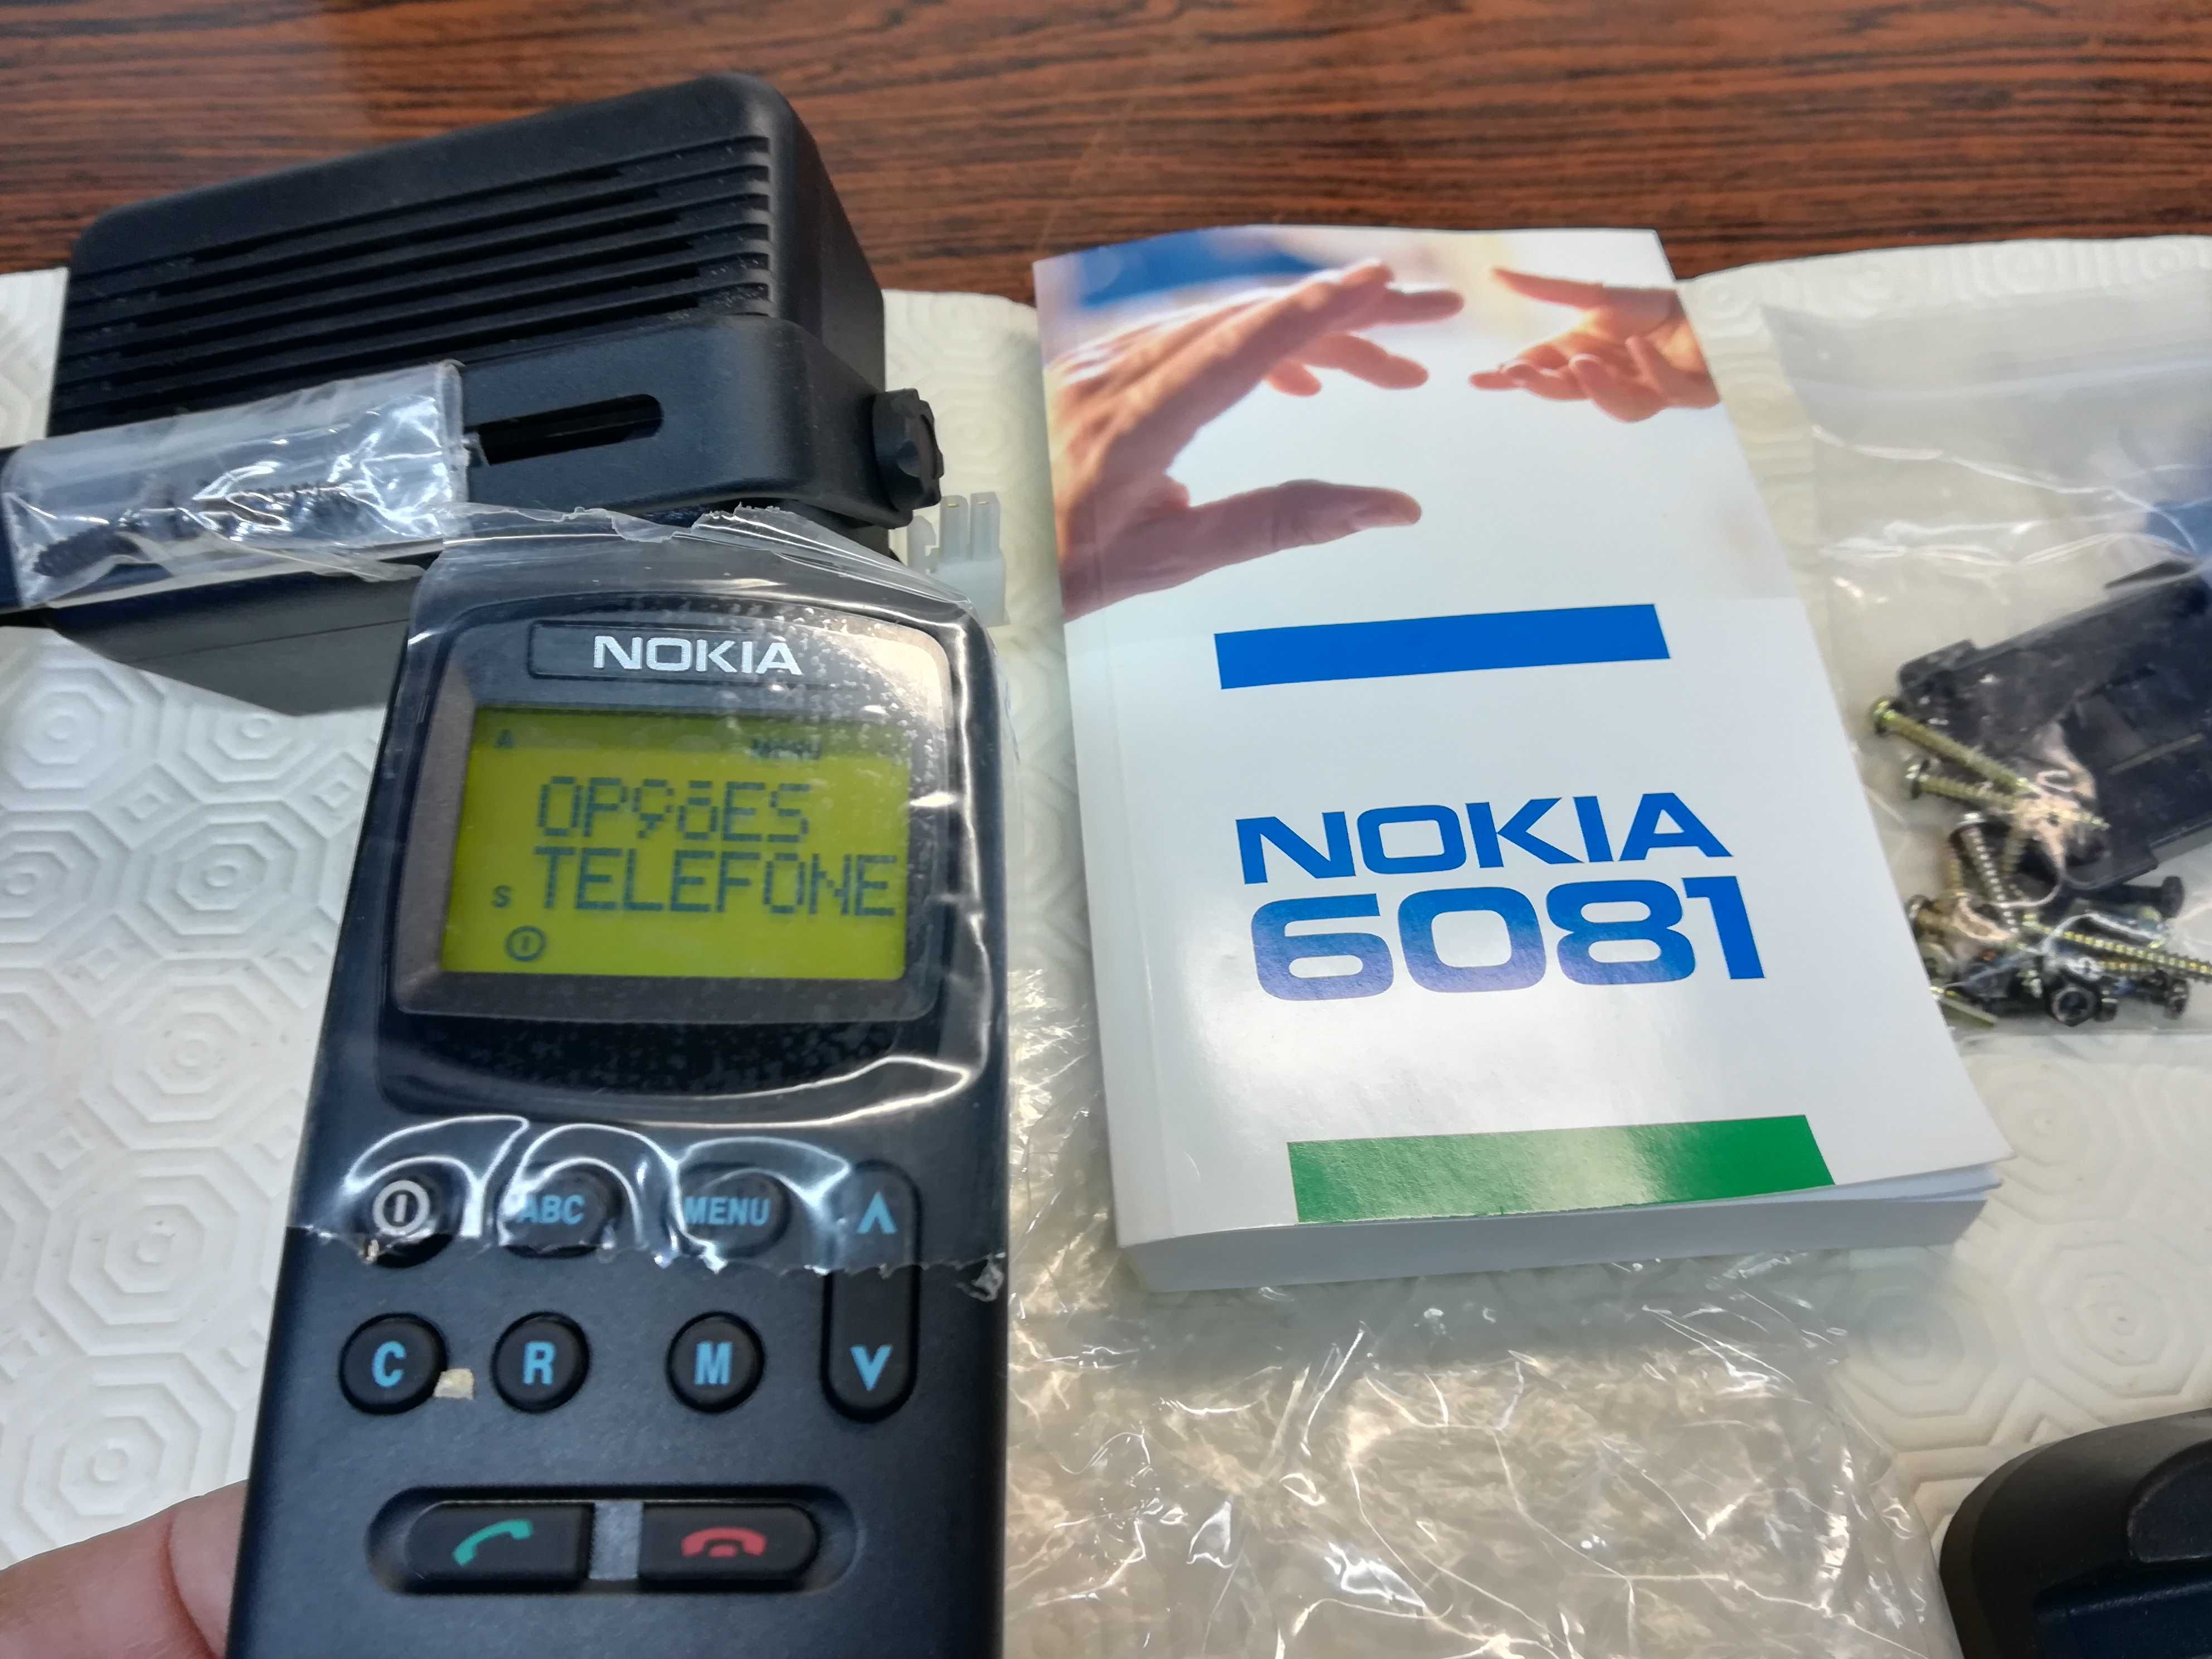 Nokia 6081 - Telemovel fixo de Carro - Novo